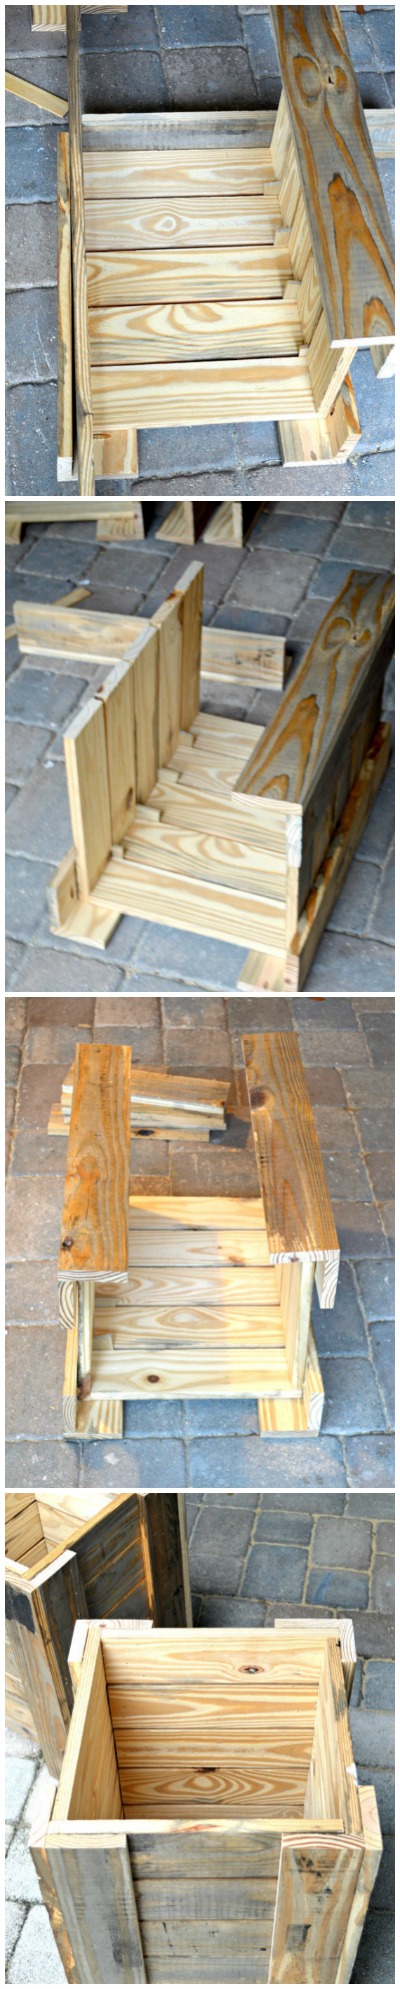 Step-to-build-wood-planter-box-H2OBungalow